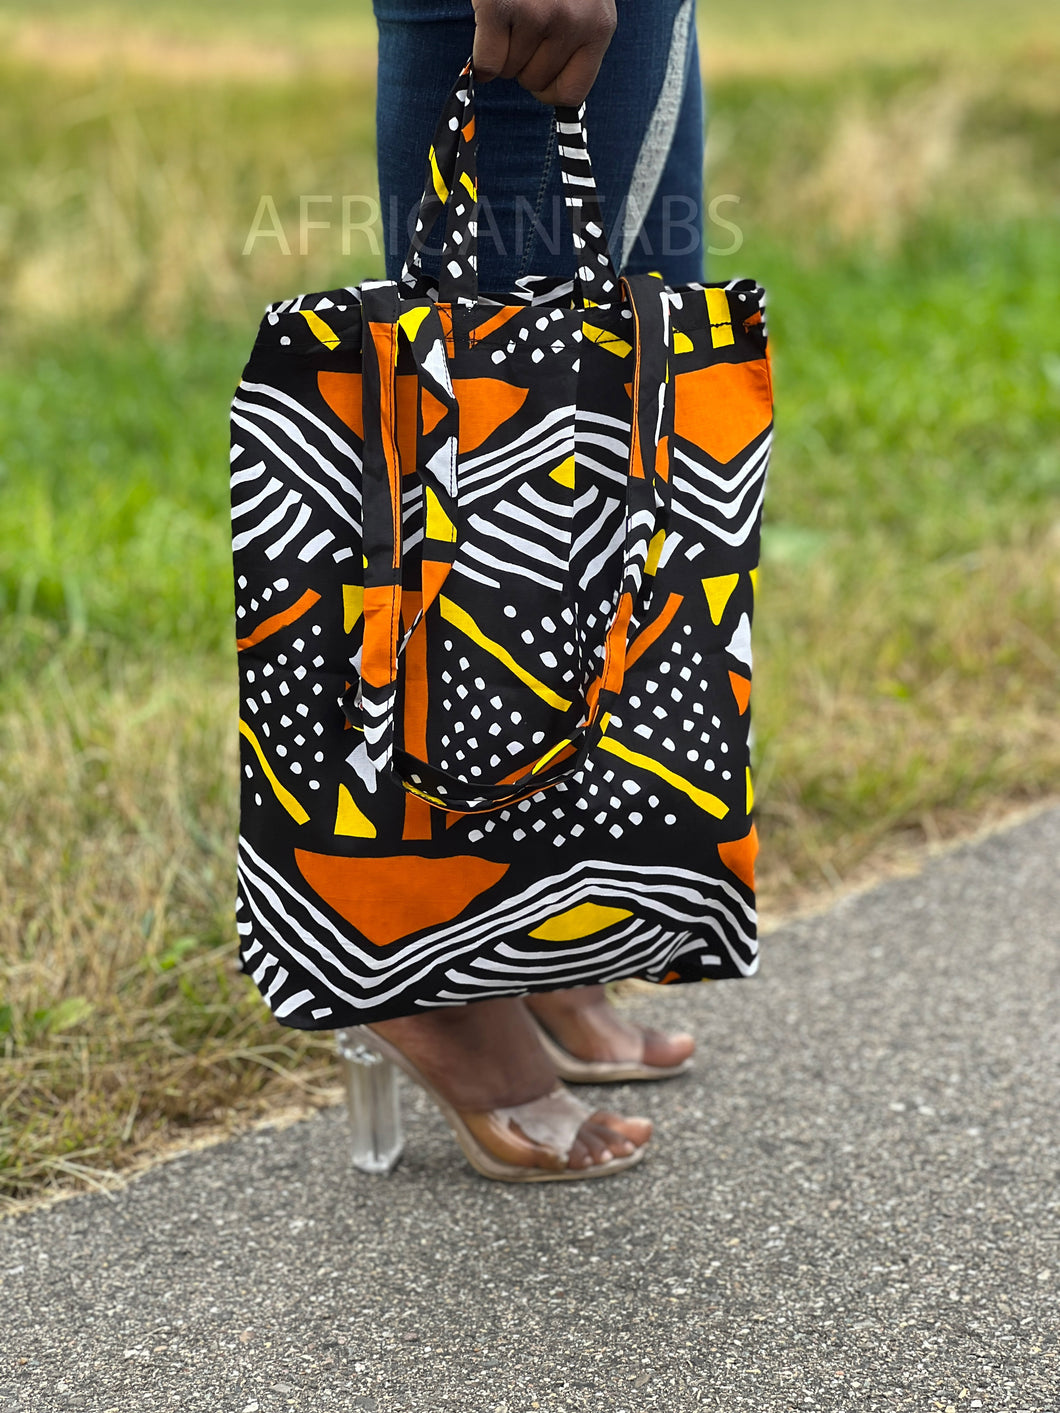 Shopper bag with African print - Orange / yellow bogolan - Reusable Shopping Bag made of cotton